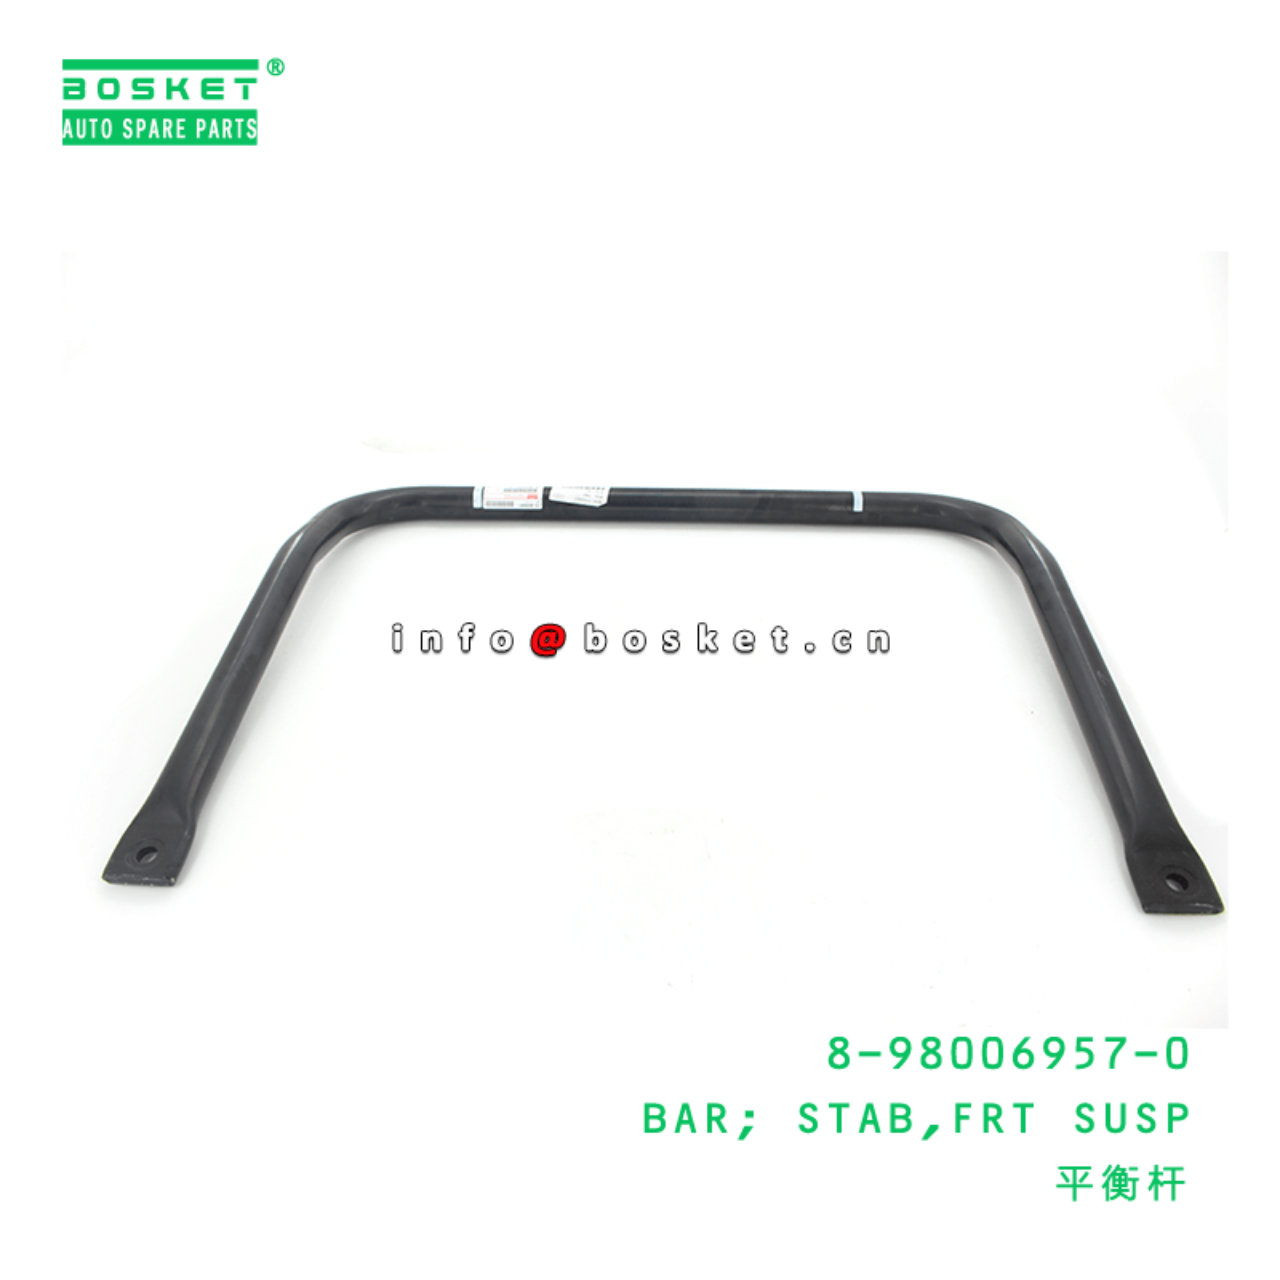 8-98006957-0 Front Suspension Stab Bar 8980069570 Suitable for ISUZU NPR